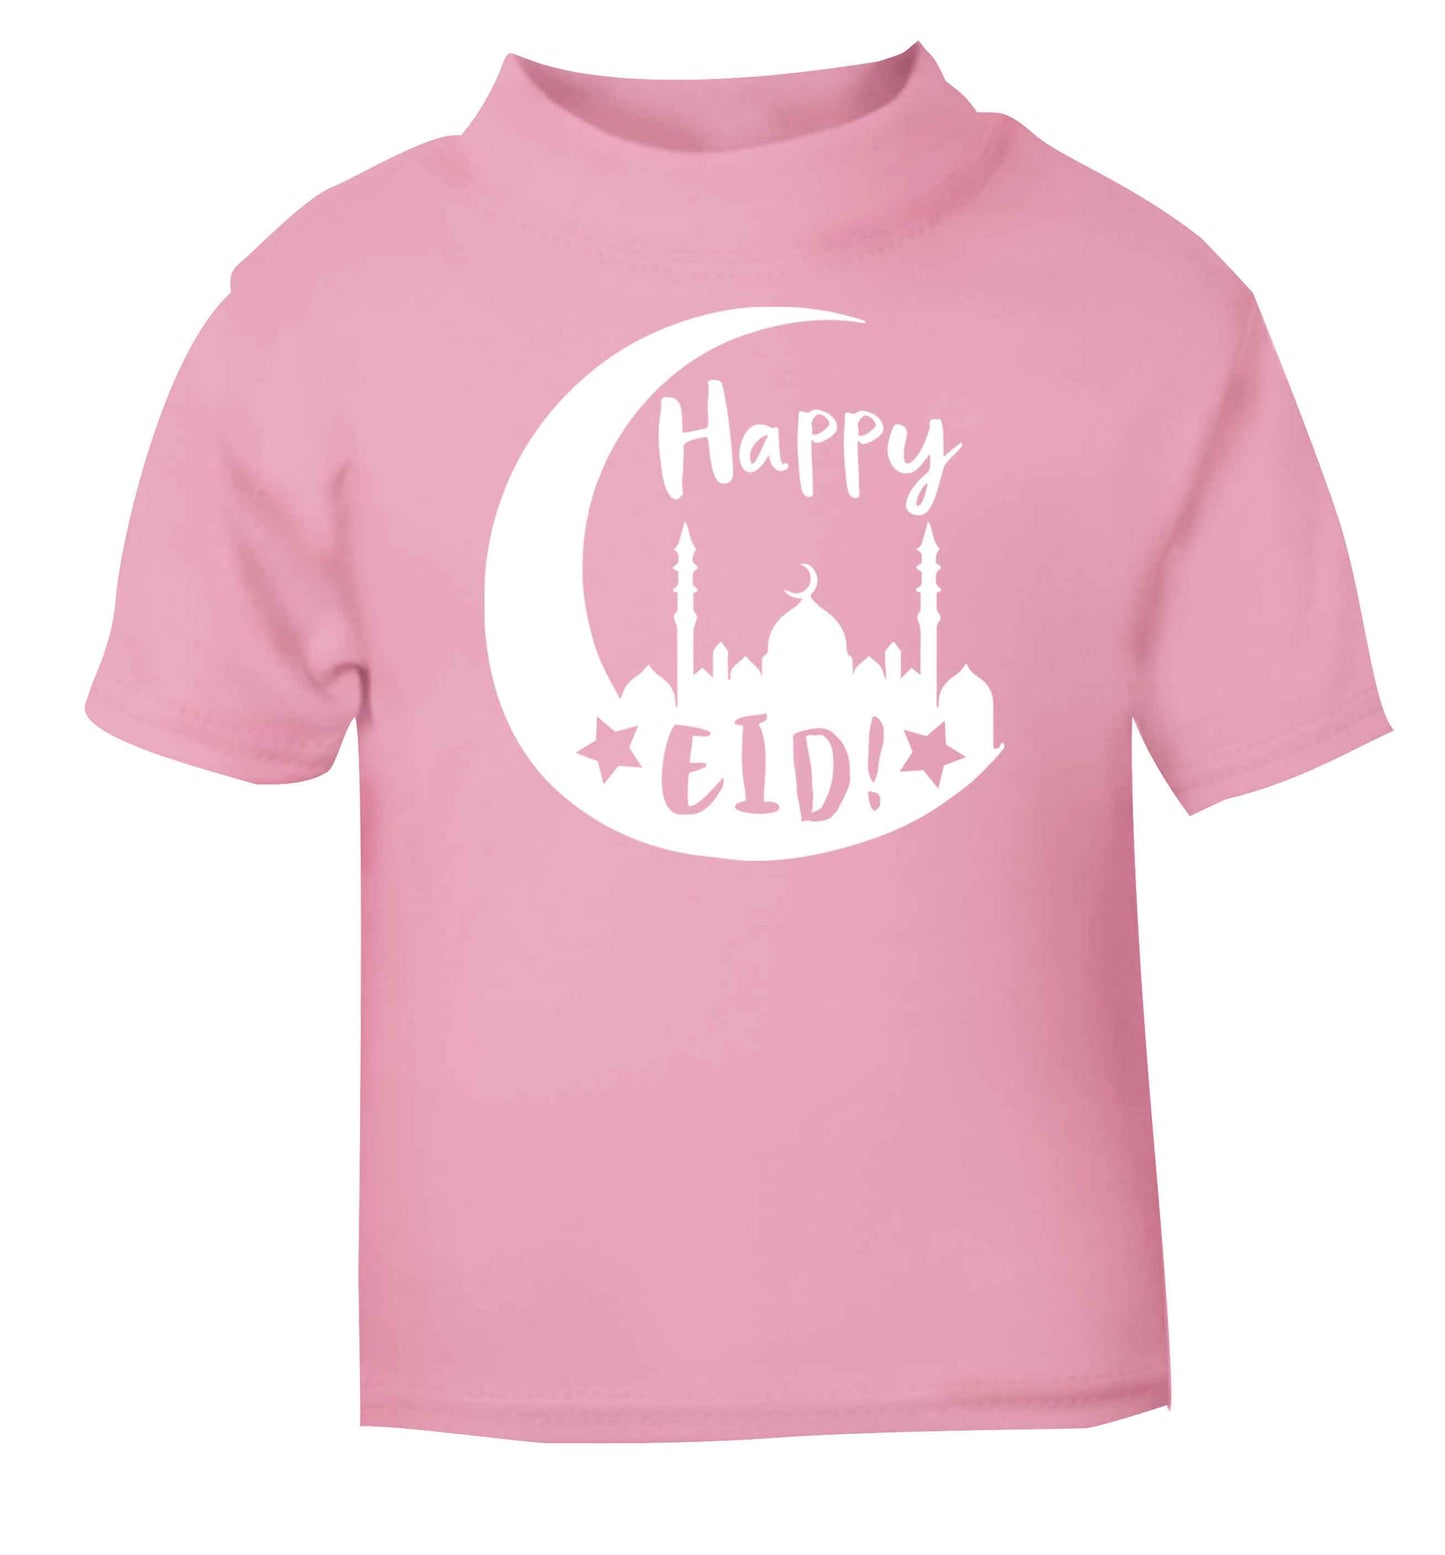 Happy Eid light pink baby toddler Tshirt 2 Years